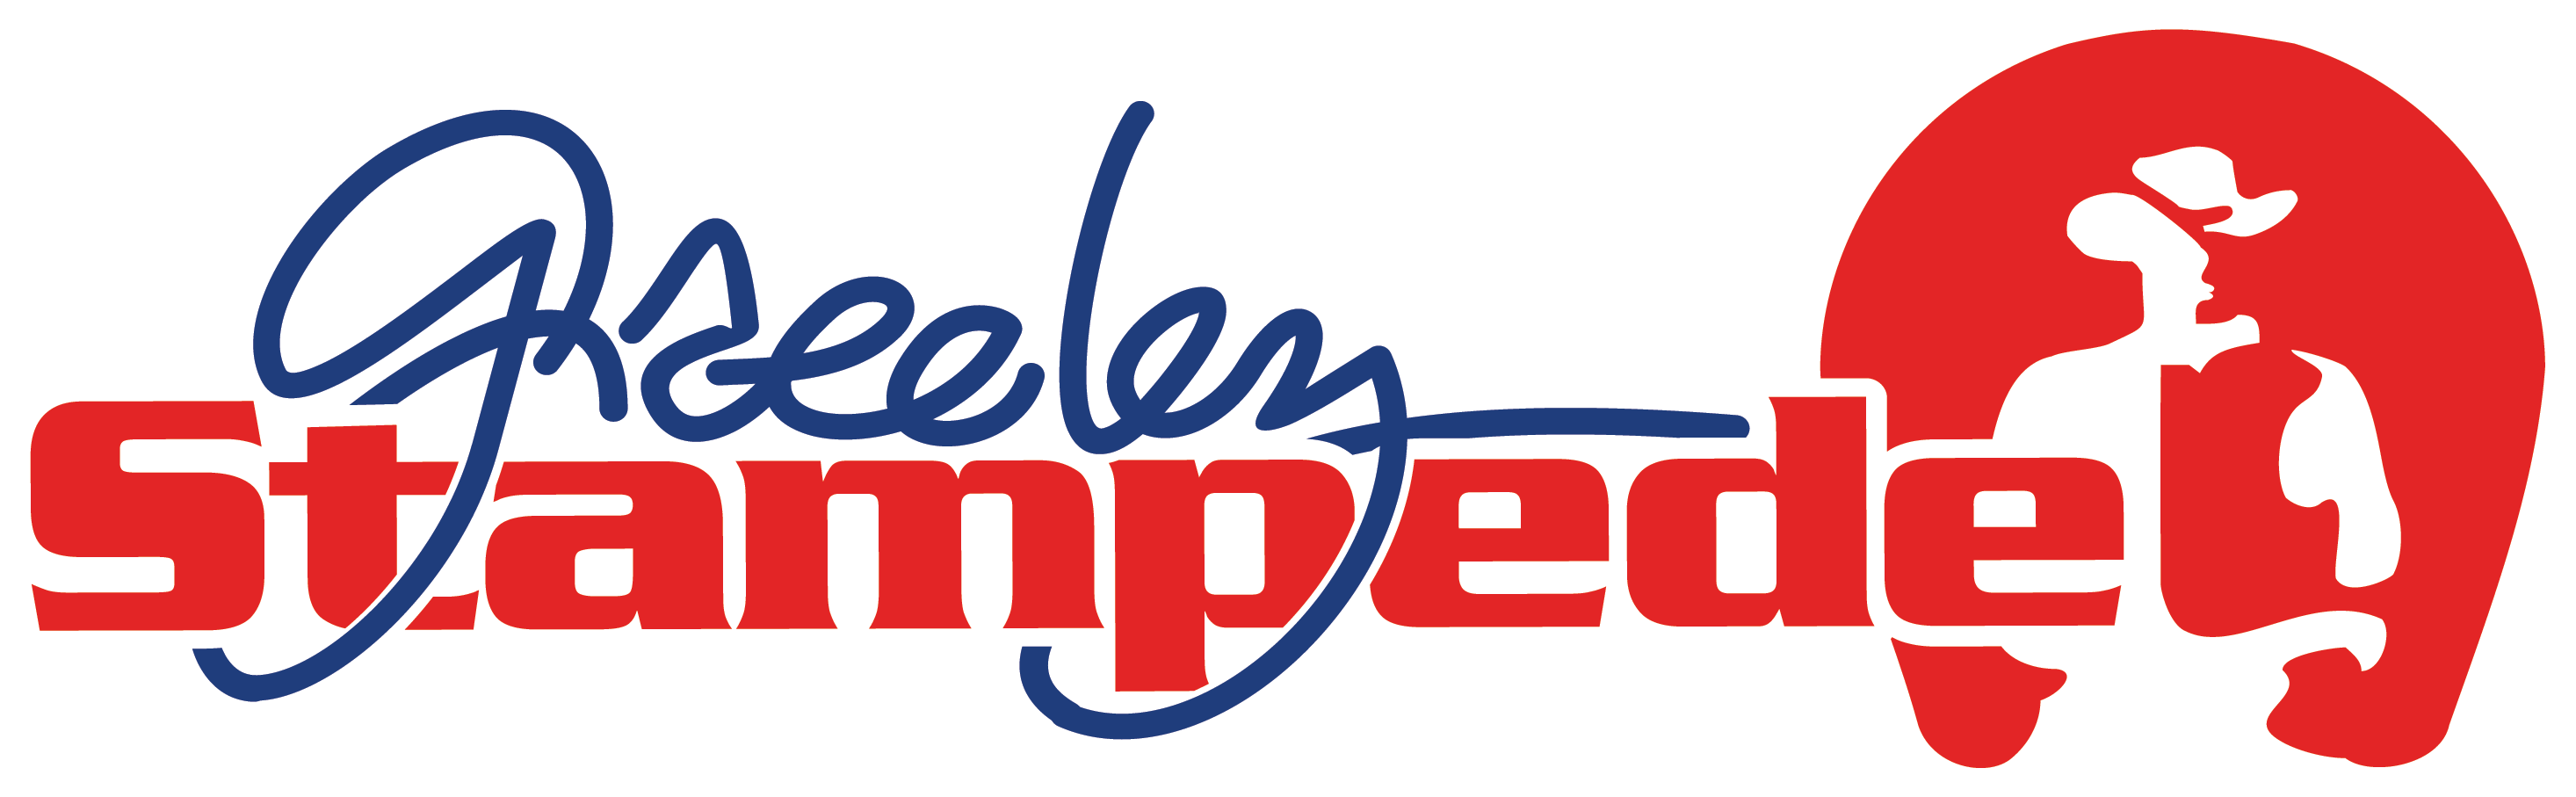 The Greeley Stampede - Greeley Stampede Logo (2932x907)